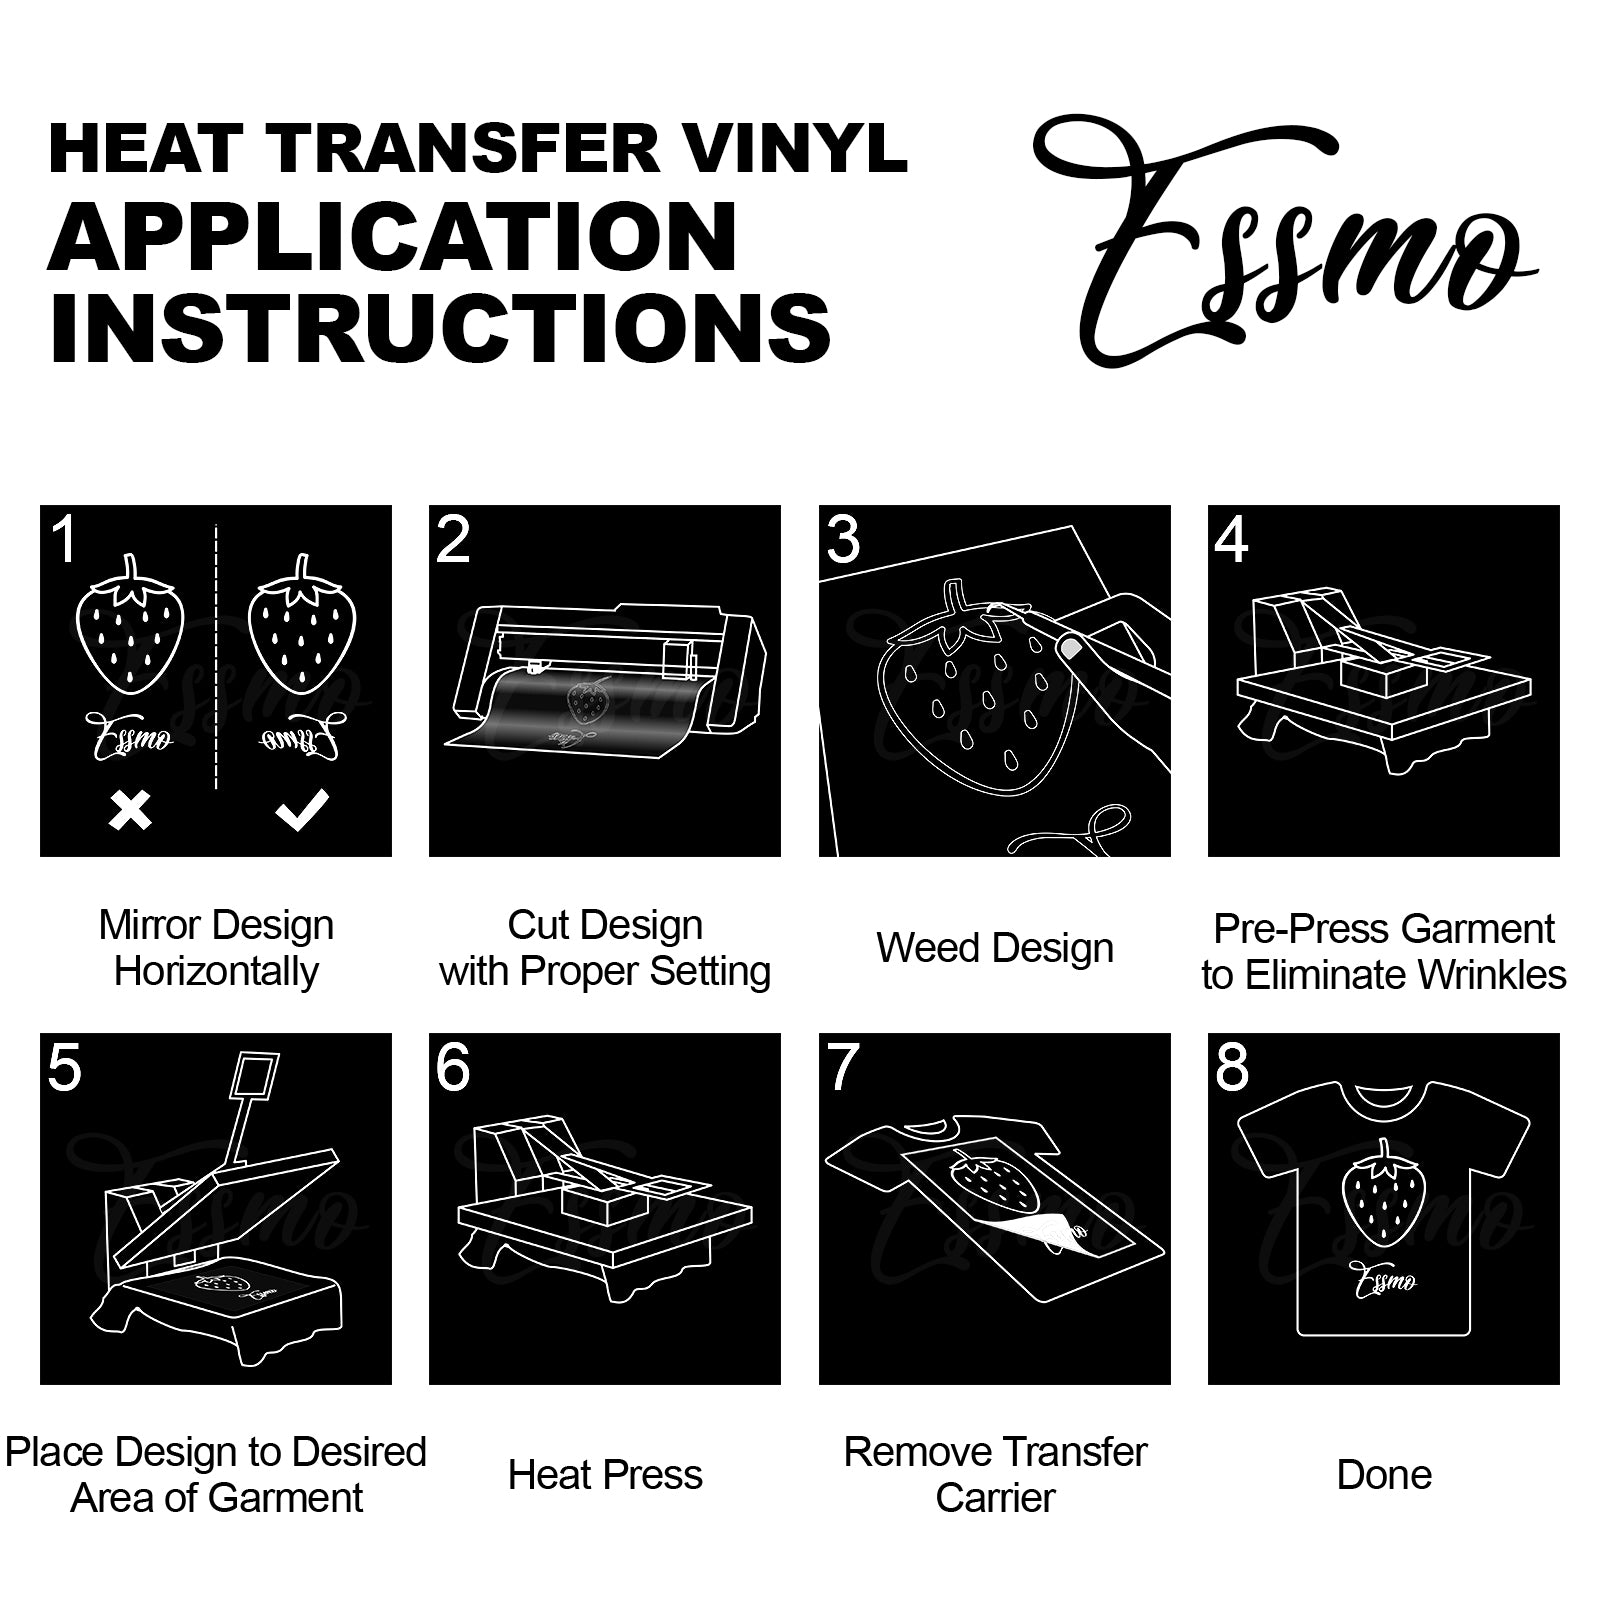 ESSMO™ Black Matte Solid Heat Transfer Vinyl HTV DP01